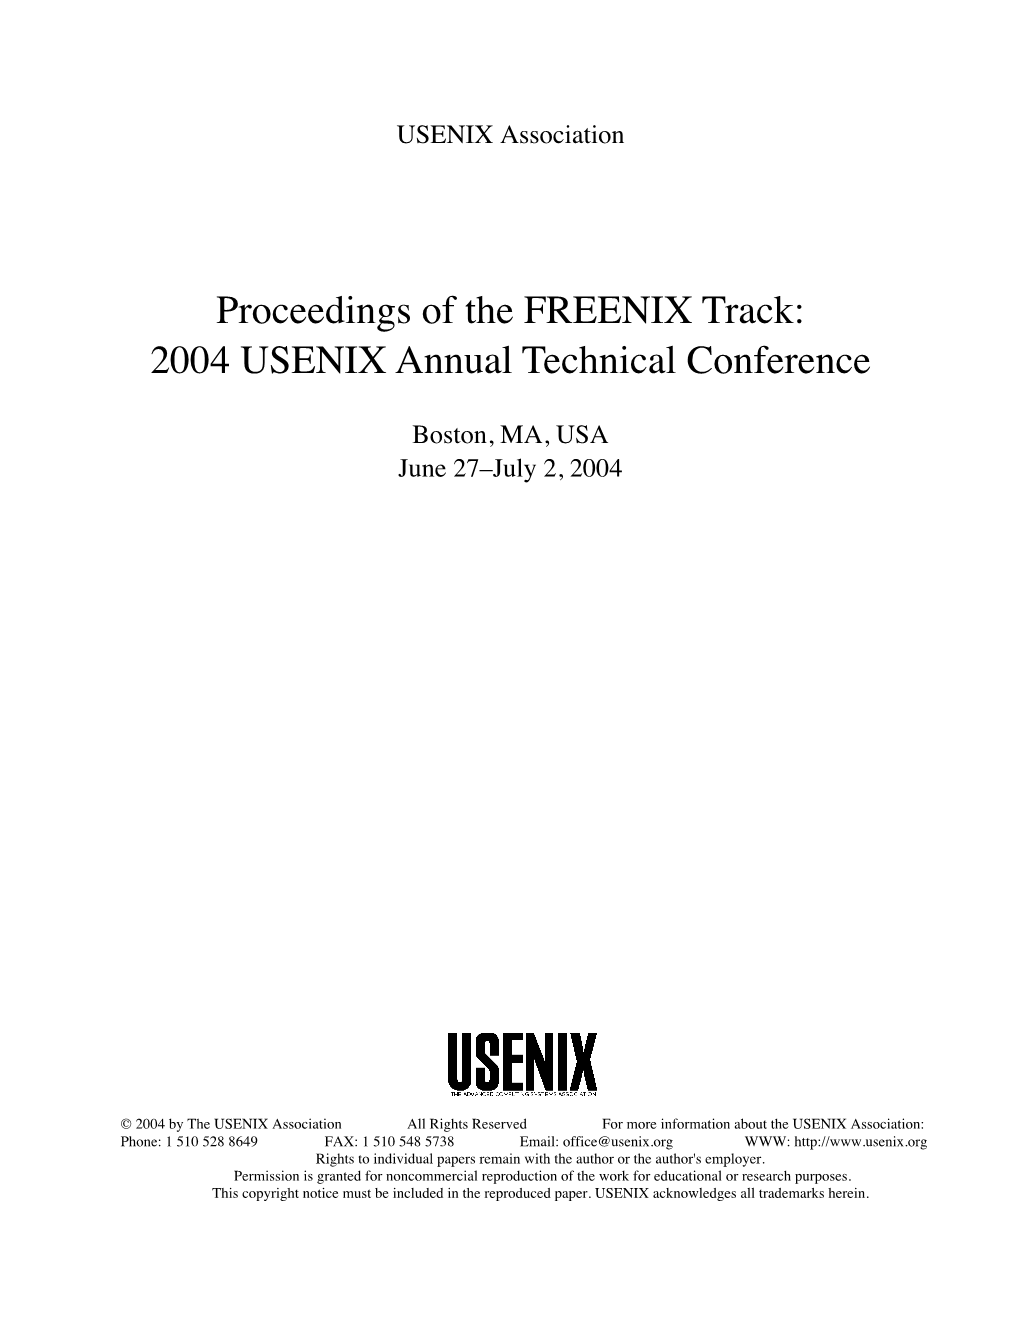 2004 USENIX Annual Technical Conference